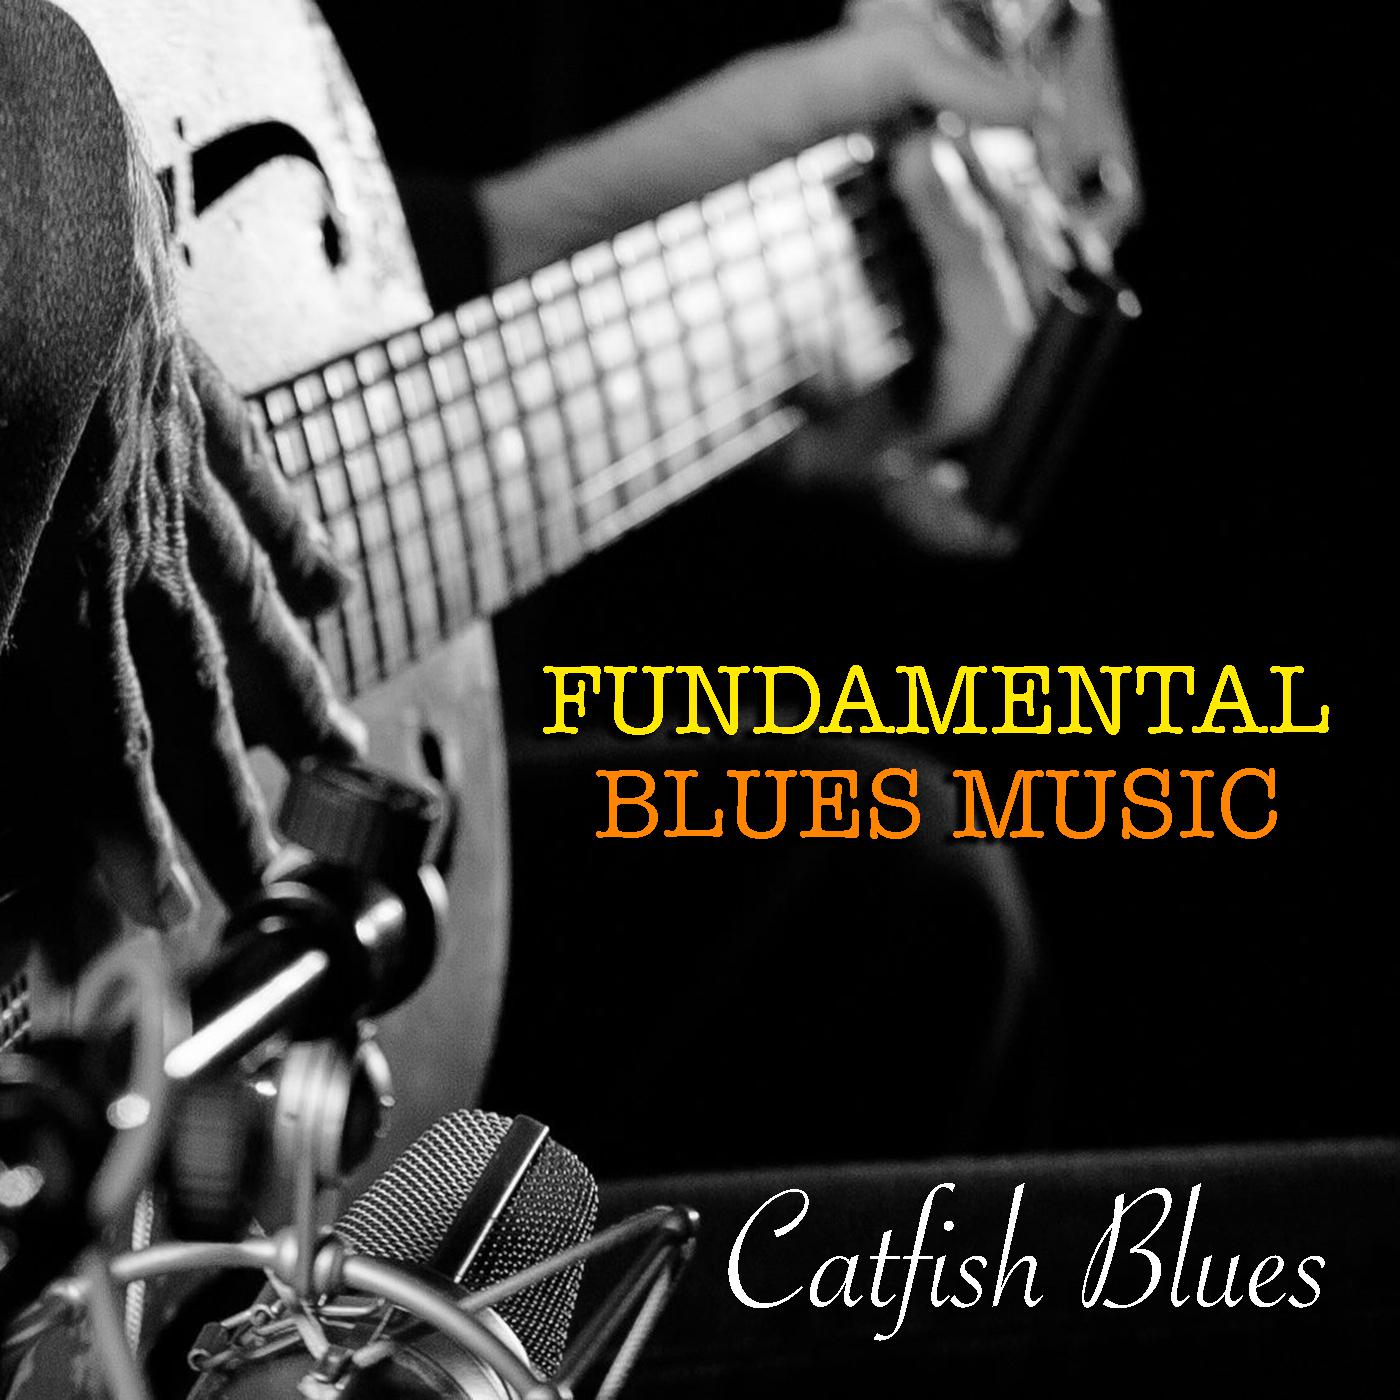 Catfish Blues Fundamental Blues Music